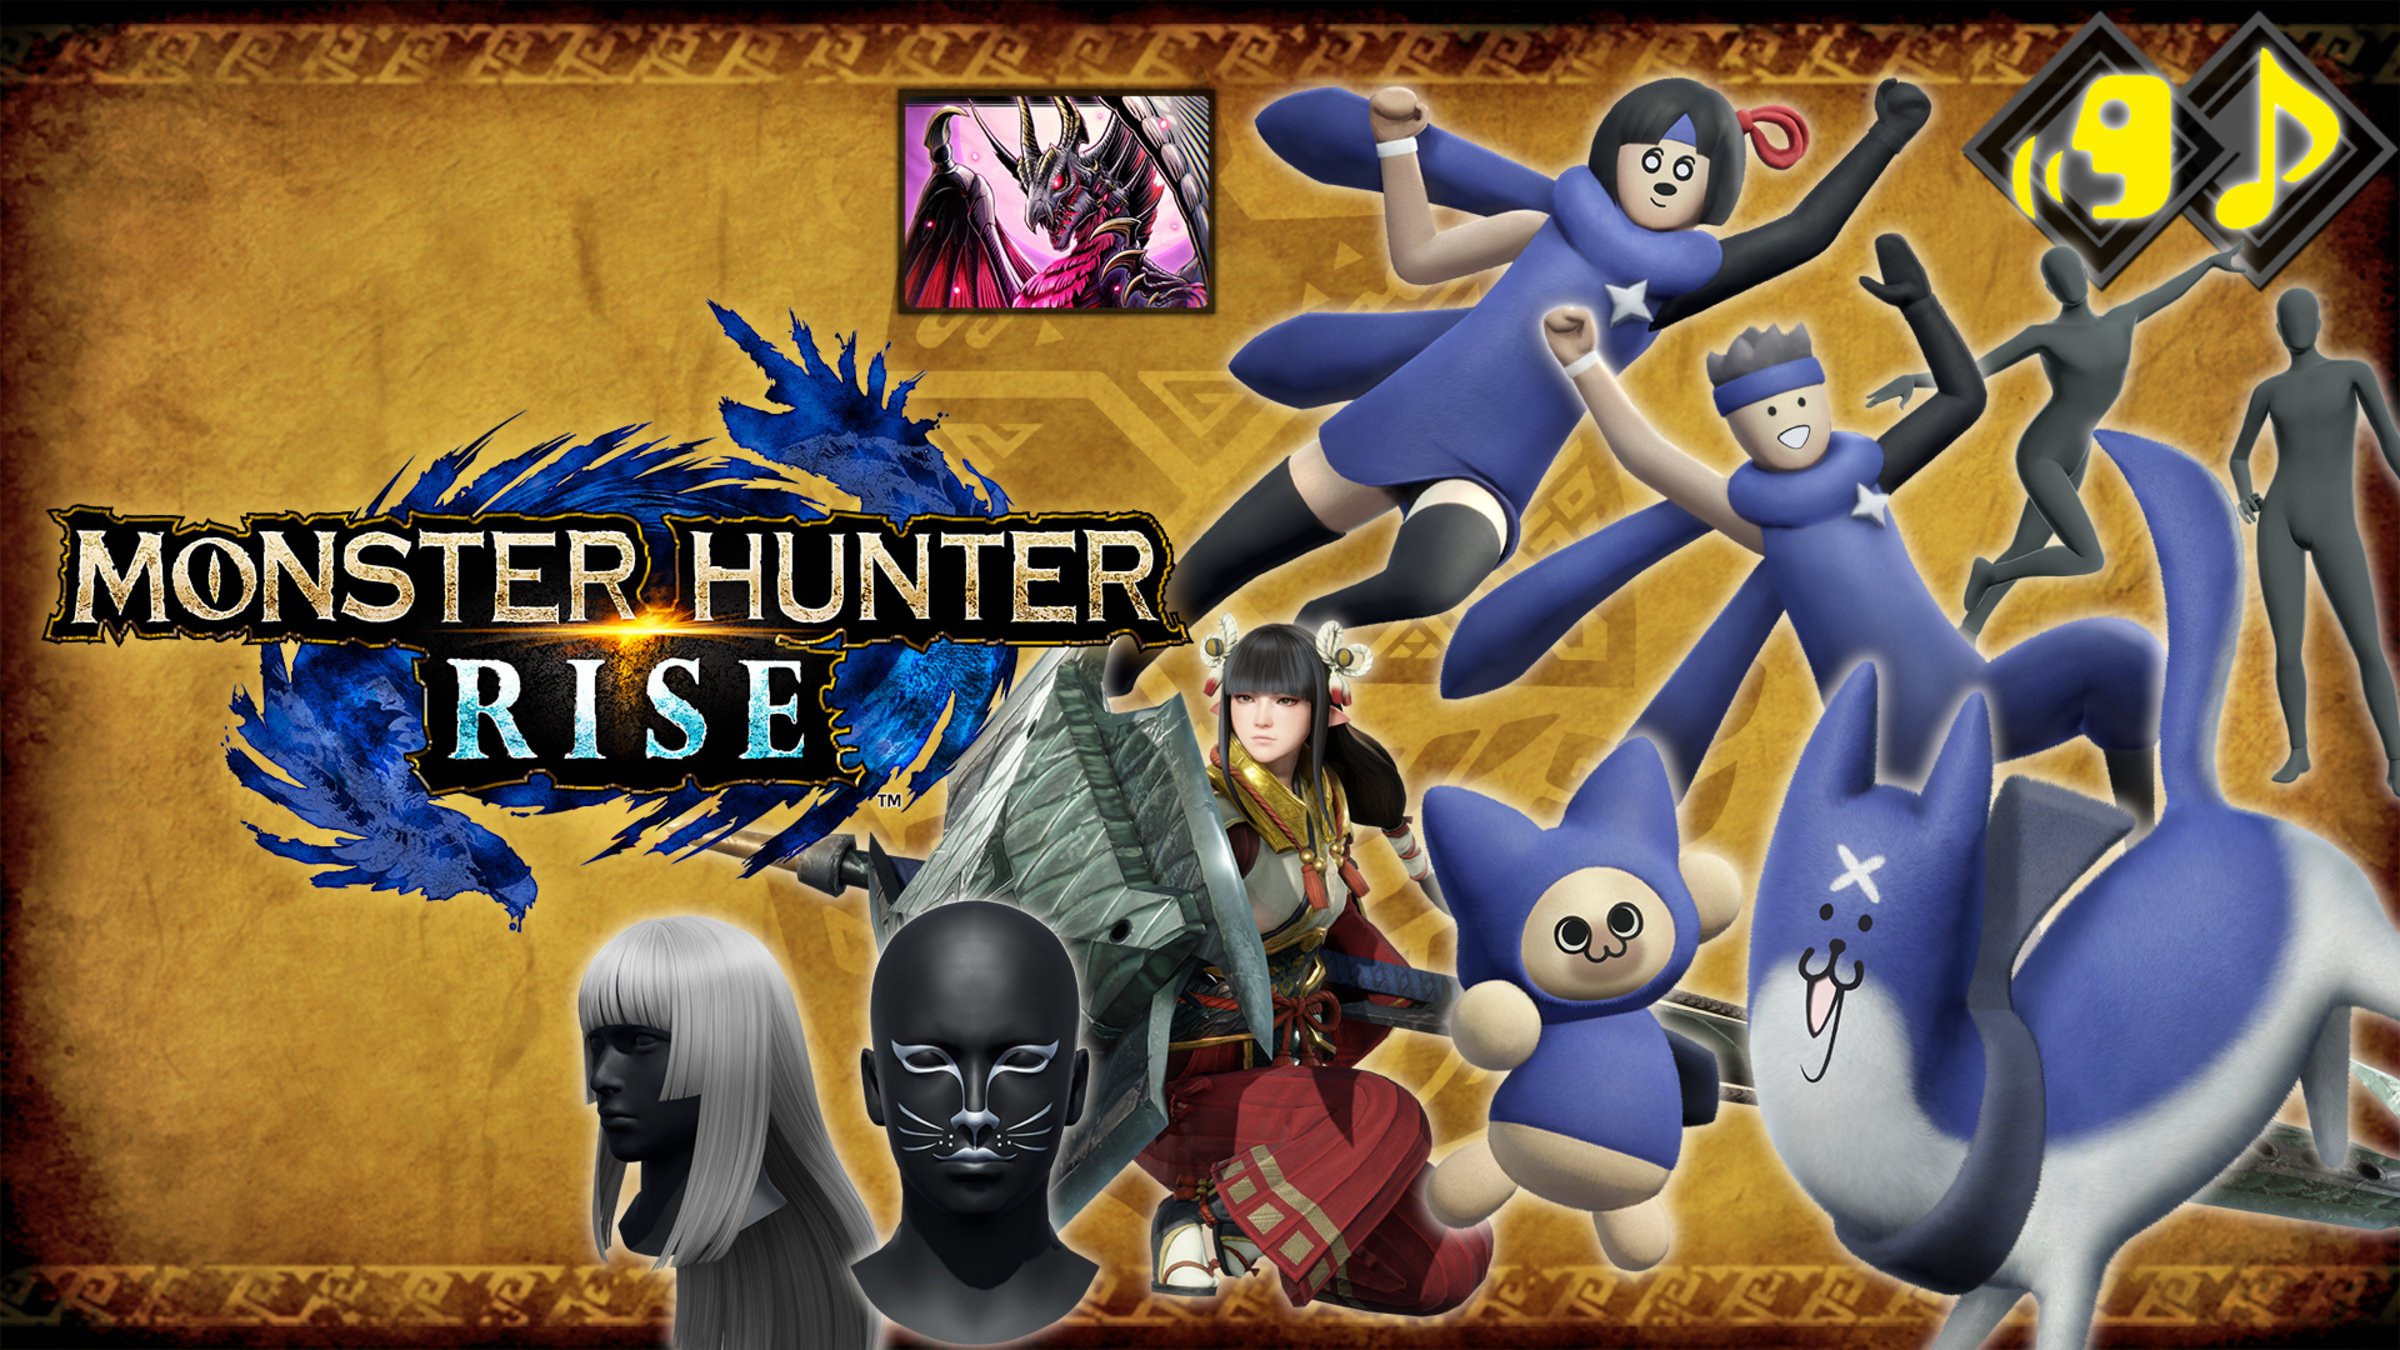 Monster Hunter Rise DLC Pack 9 for Nintendo Switch - Nintendo Official Site